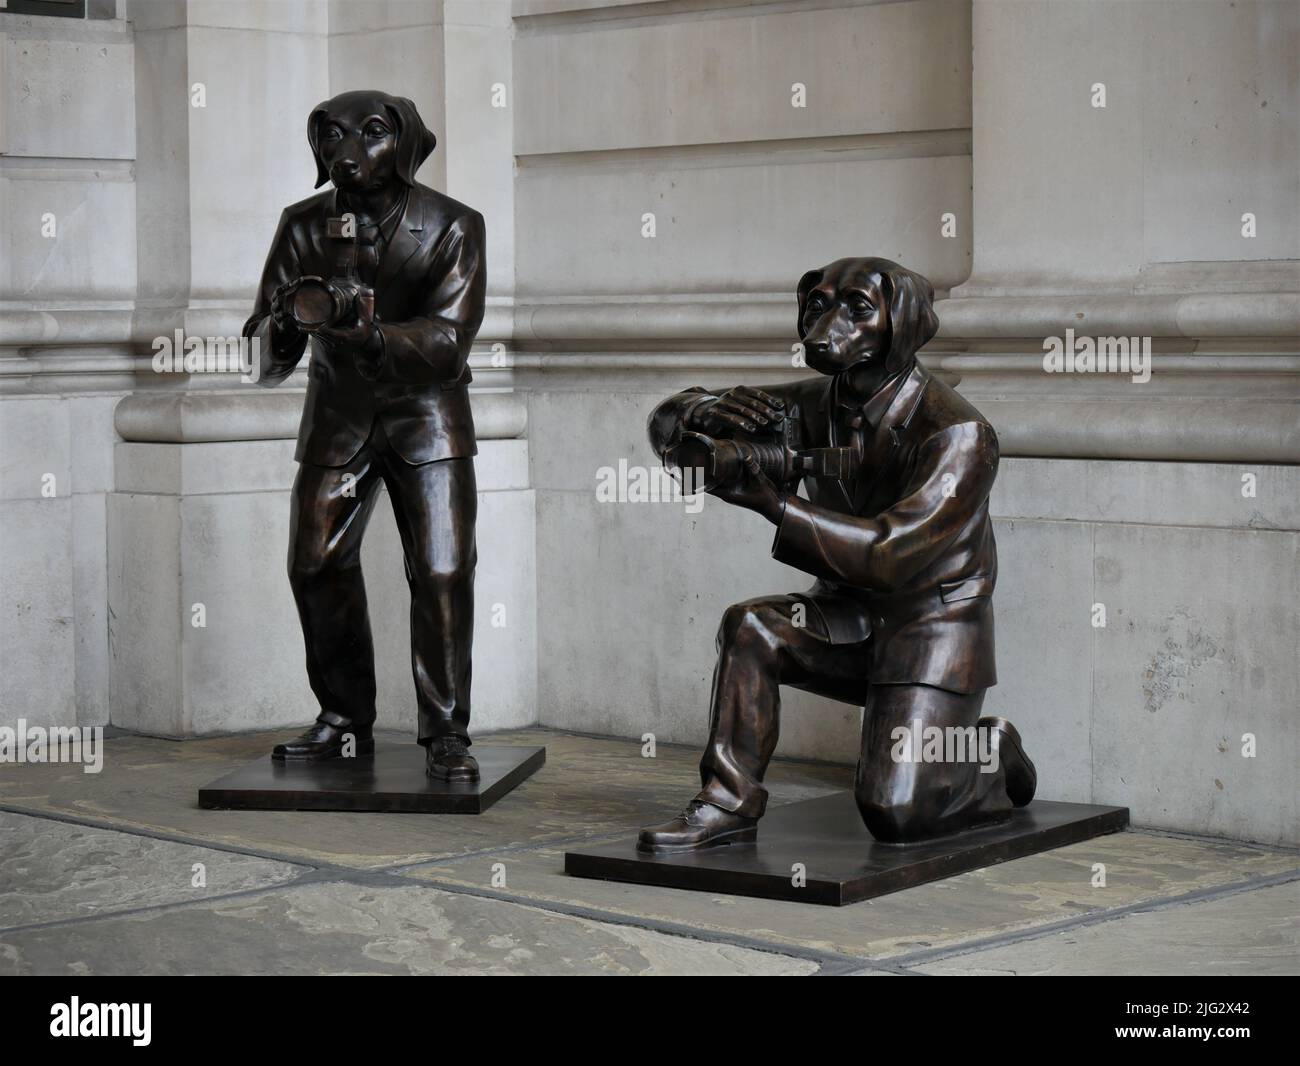 Dogman Statues outside entrance to The Royal Exchange, London Stock Photo